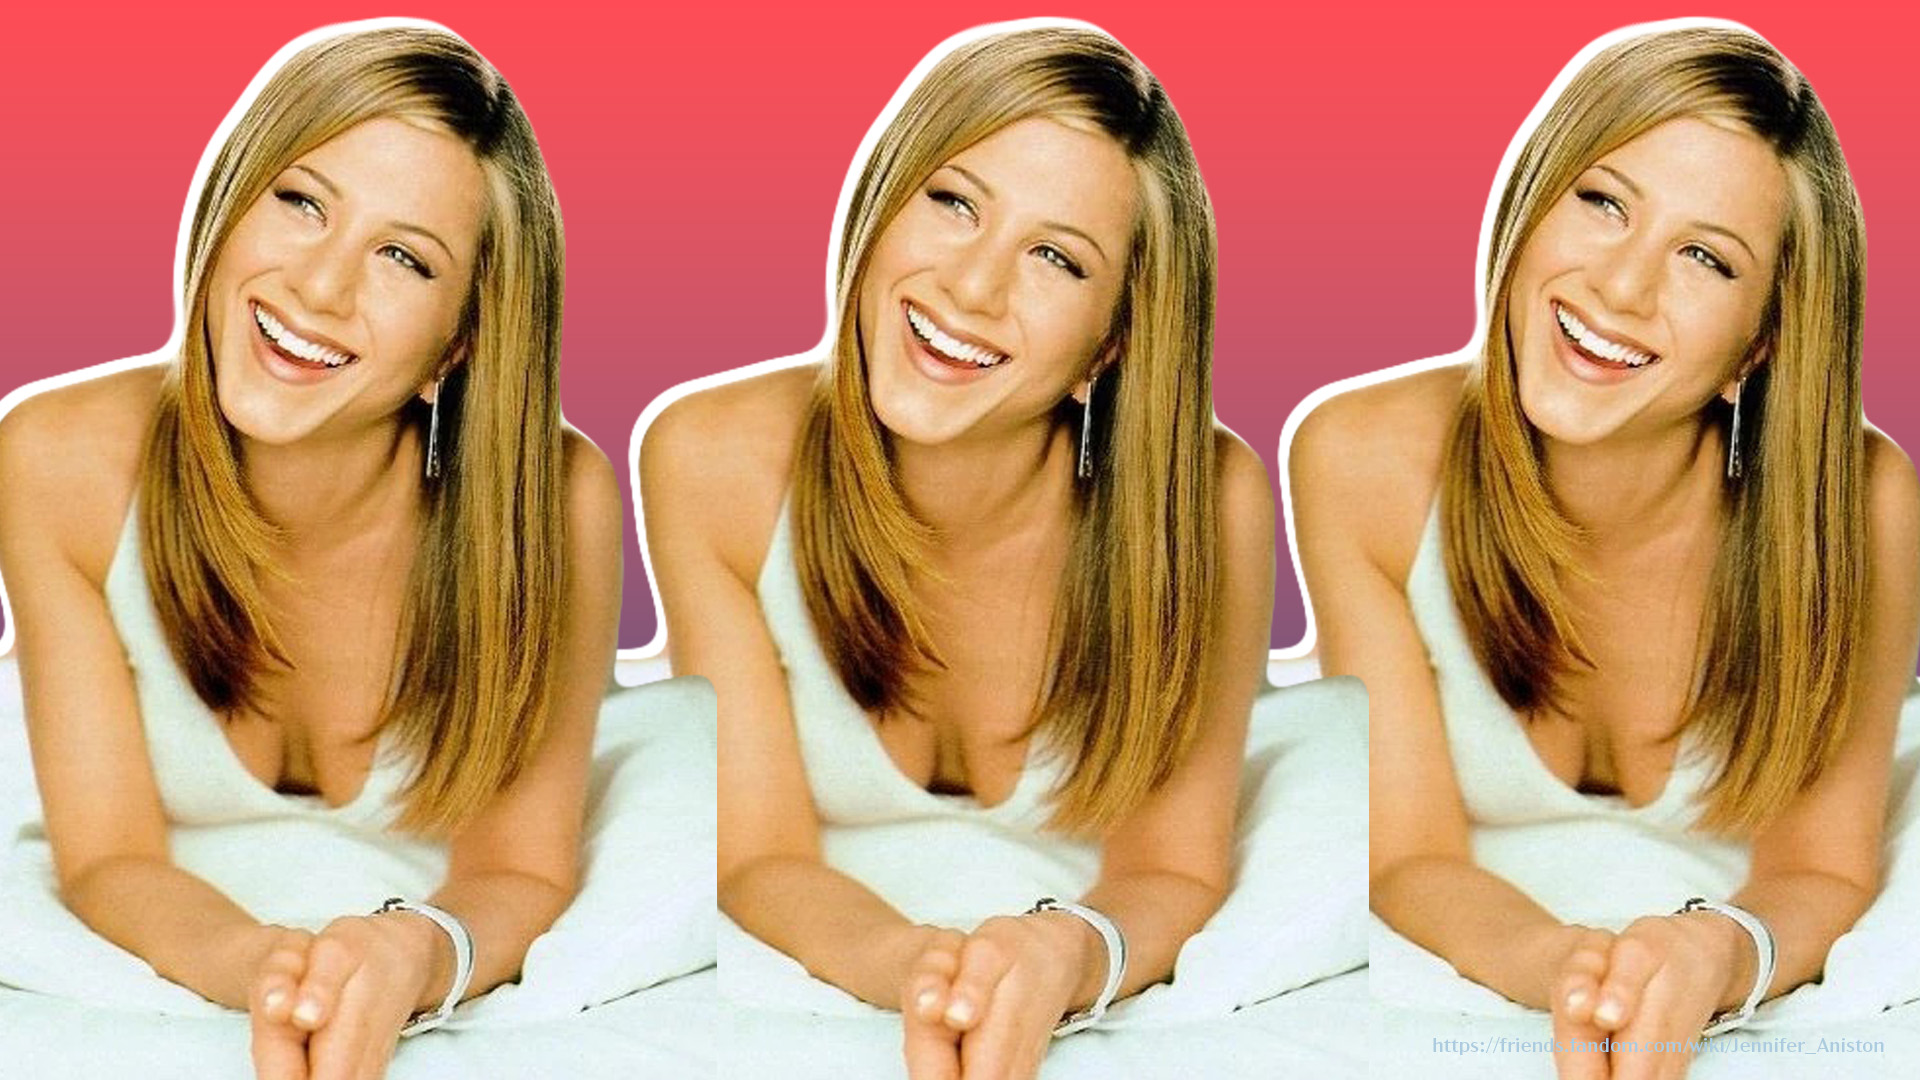 3 Sleep Tips to Create the Perfect Bedtime Routine, According to Jennifer Aniston